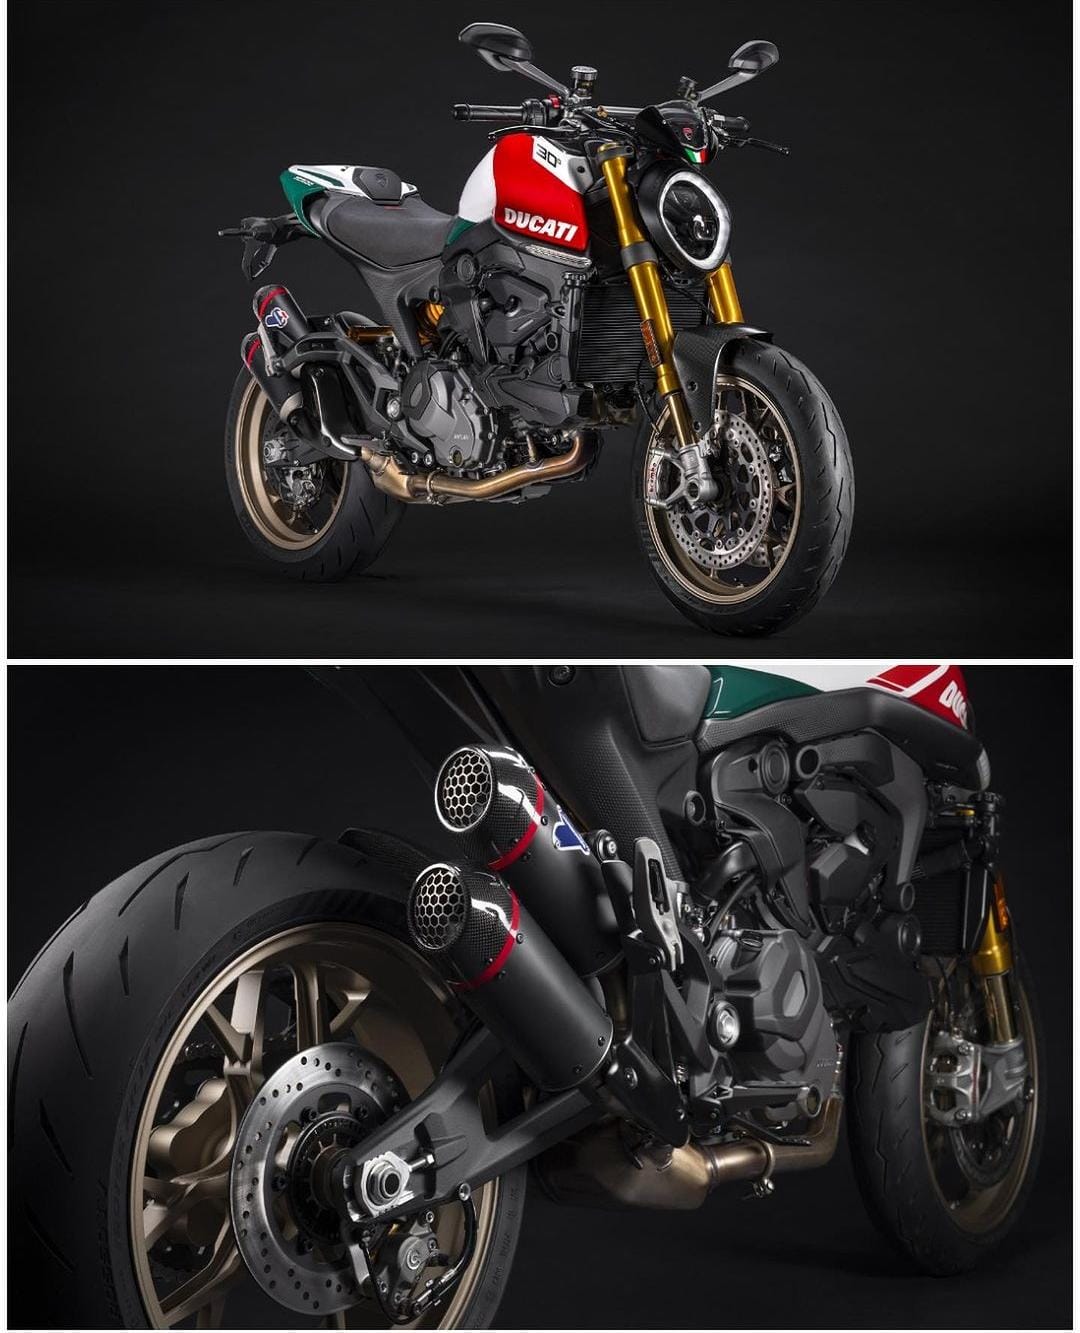 Ducati Luncurkan Motor Langka Limited Edition, Hanya Dijual 500 Unit di Dunia!